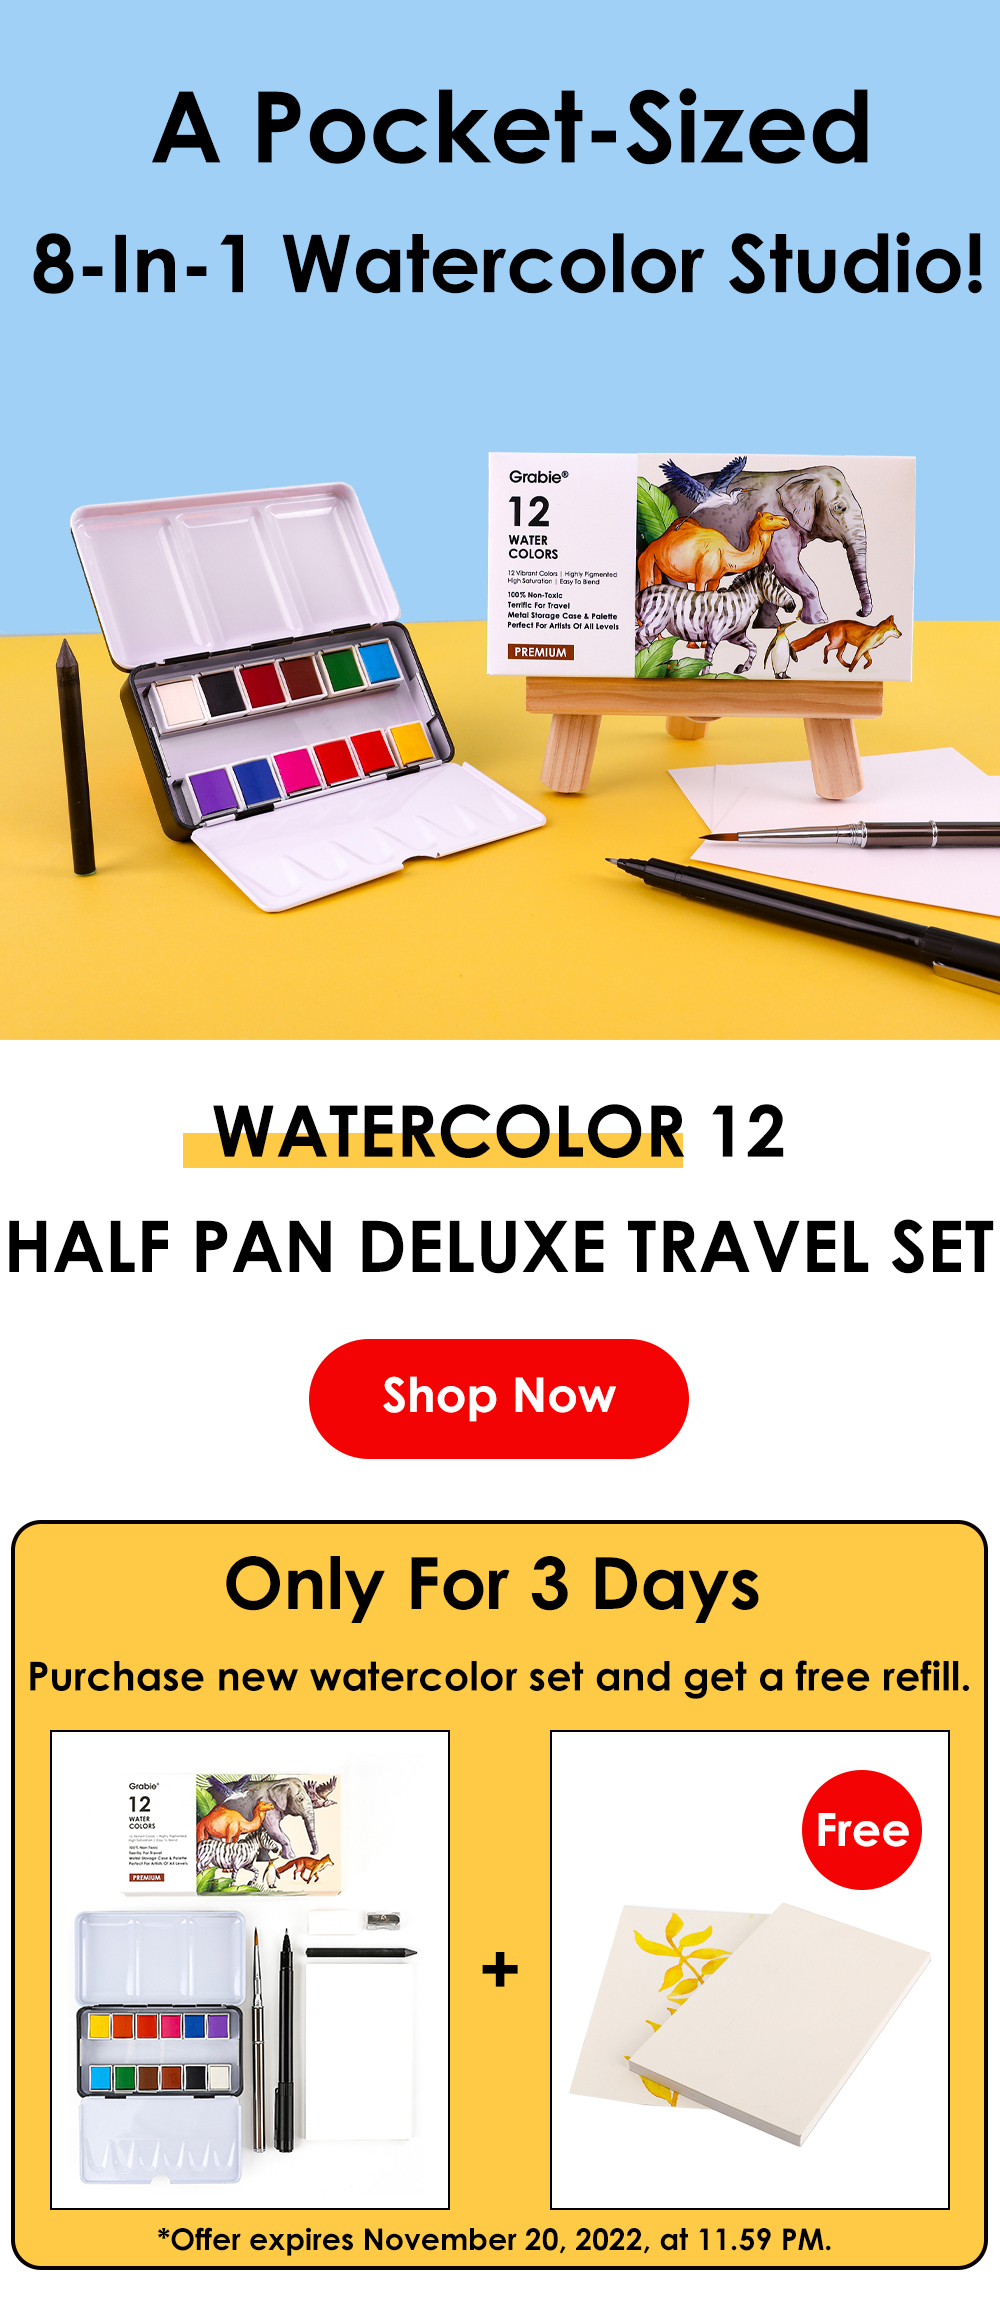 Premium Watercolor 12 Half Pan Deluxe Travel Set